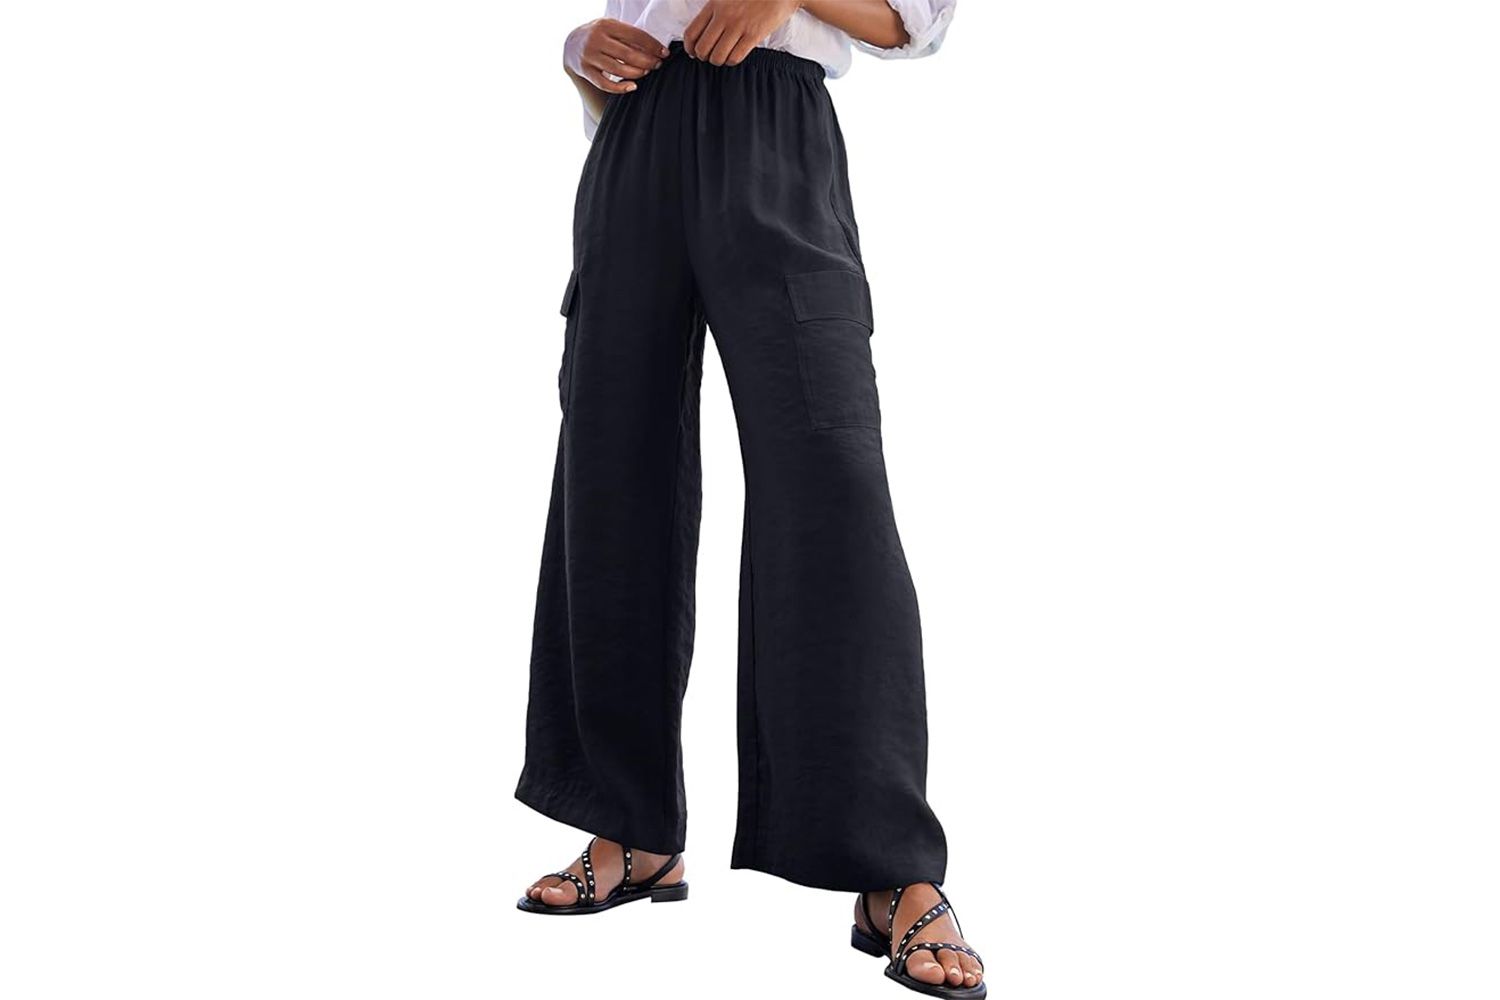 Amazon EVALESS Women's Summer Flowy Wide Leg Beach Pants